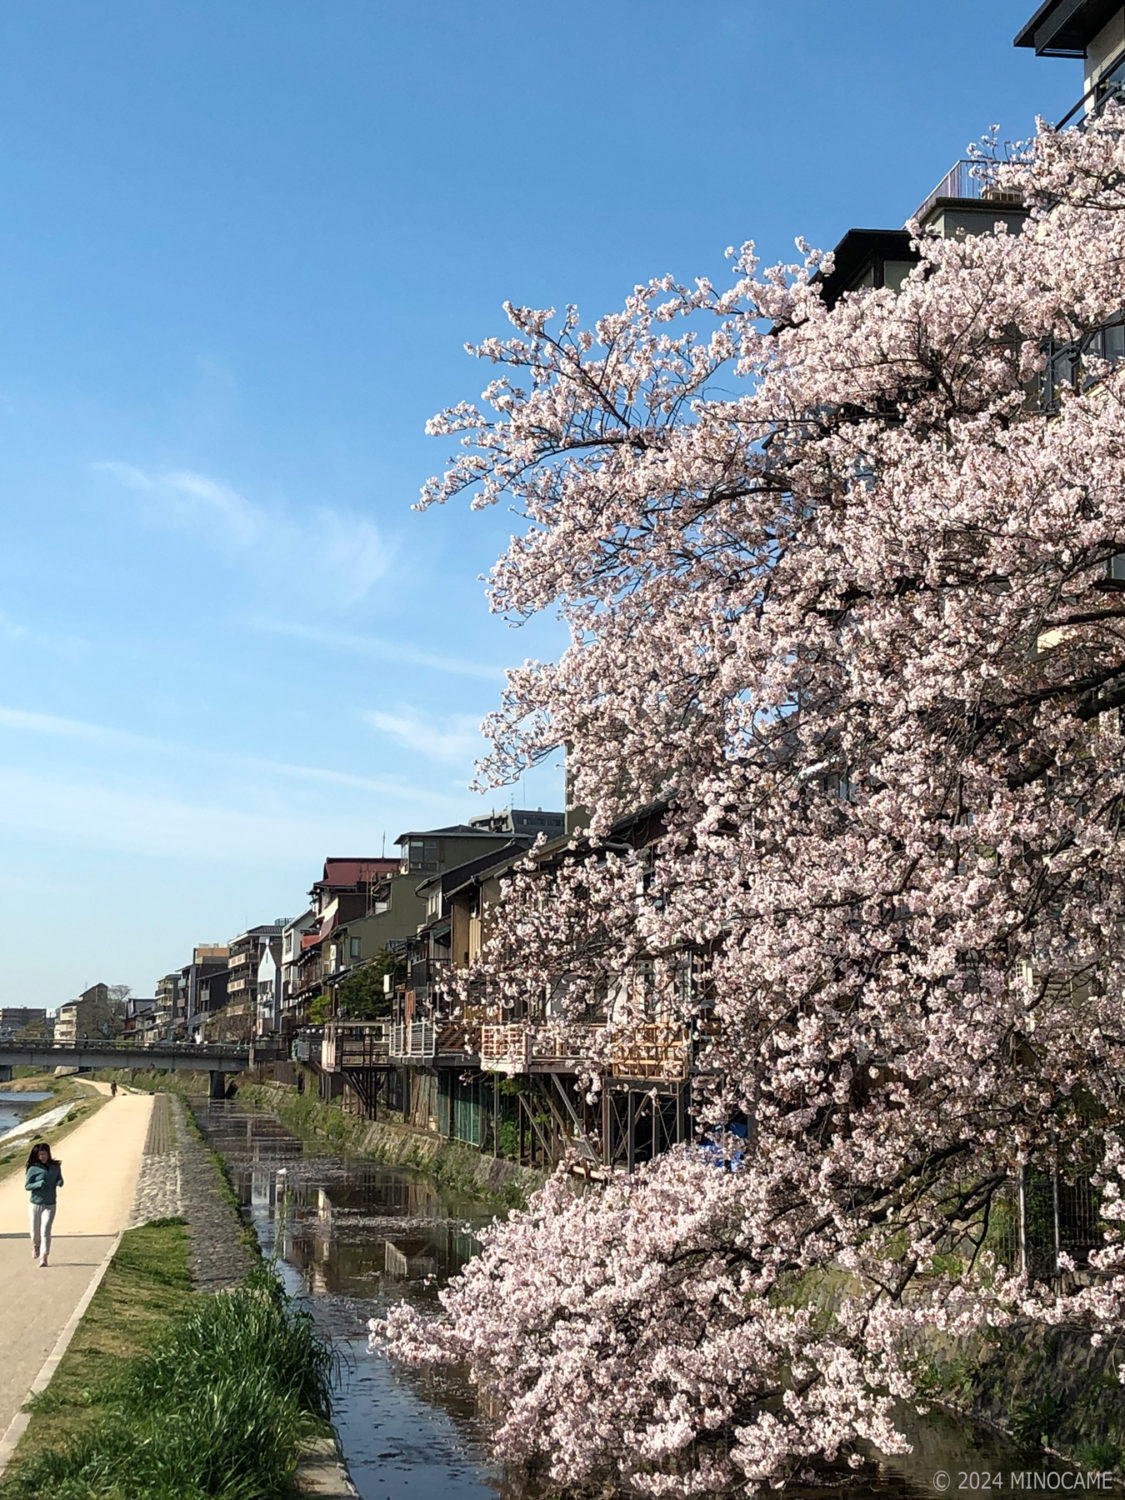 Cherry blossom along Kamogawa River in Kyoto, JP.